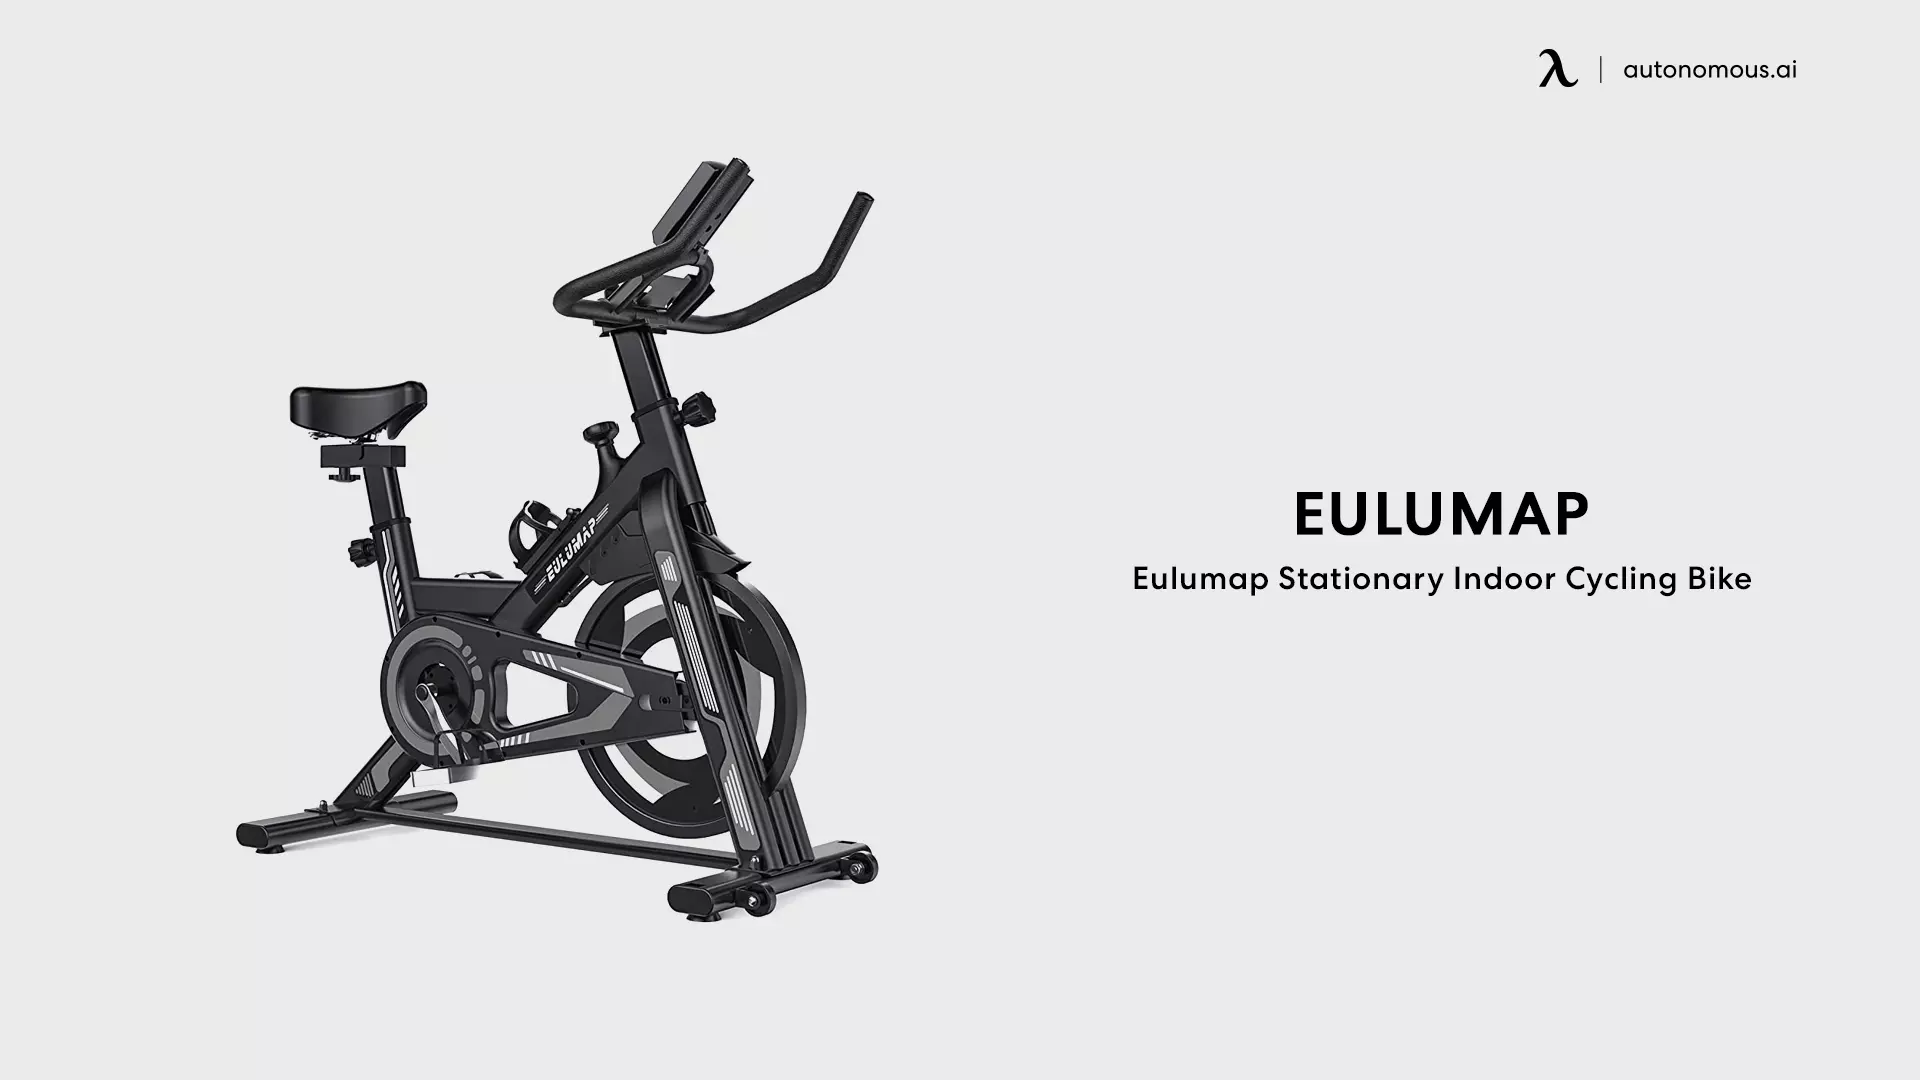 Eulumap Stationary Indoor Cycling Bike